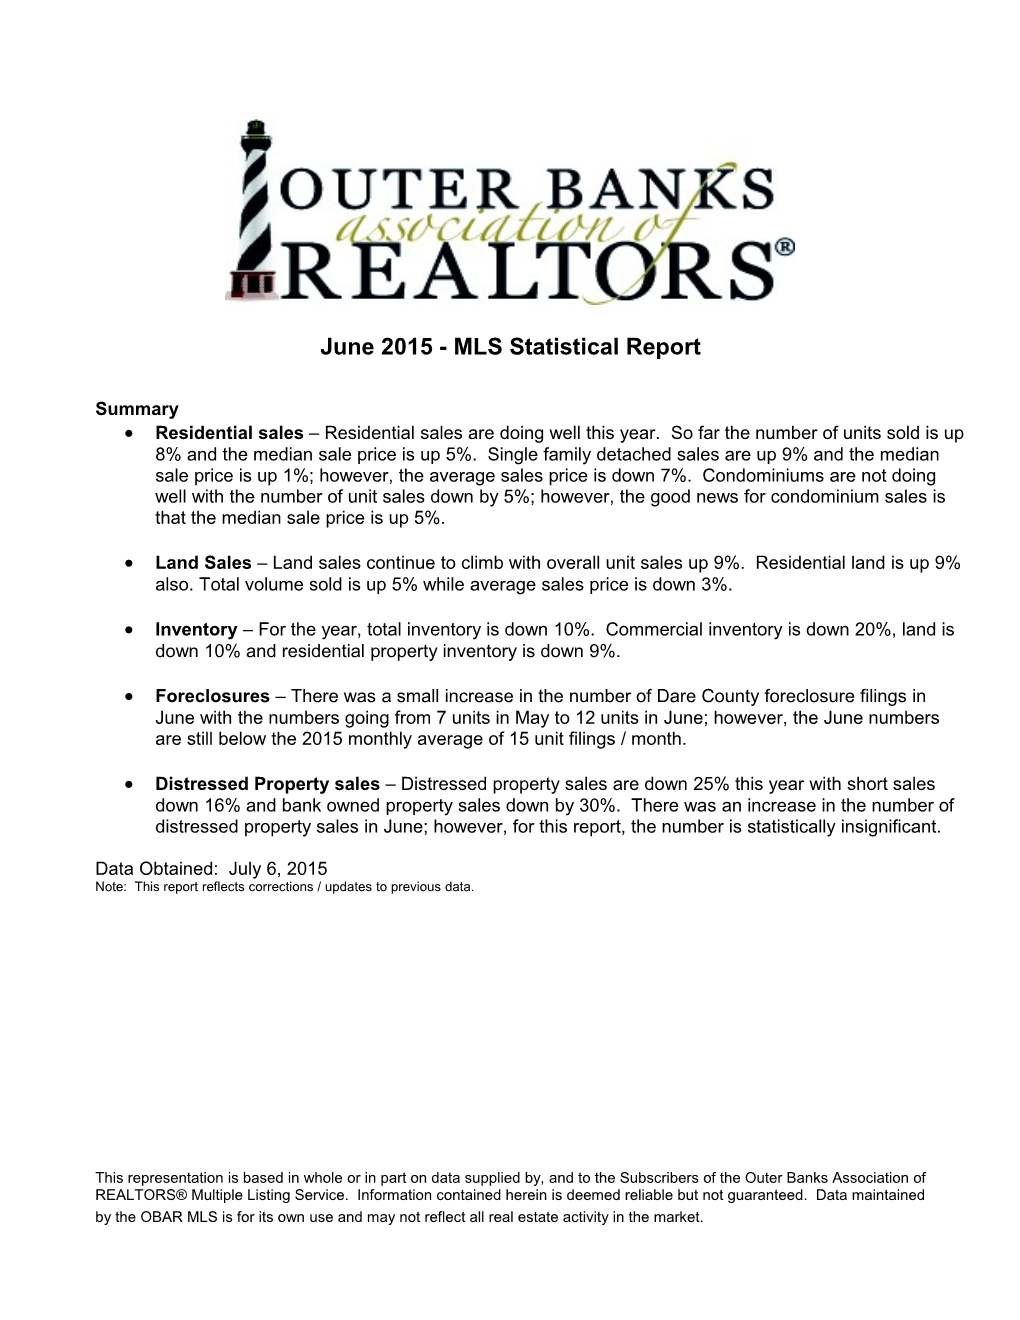 Outer Banks Association of REALTORS